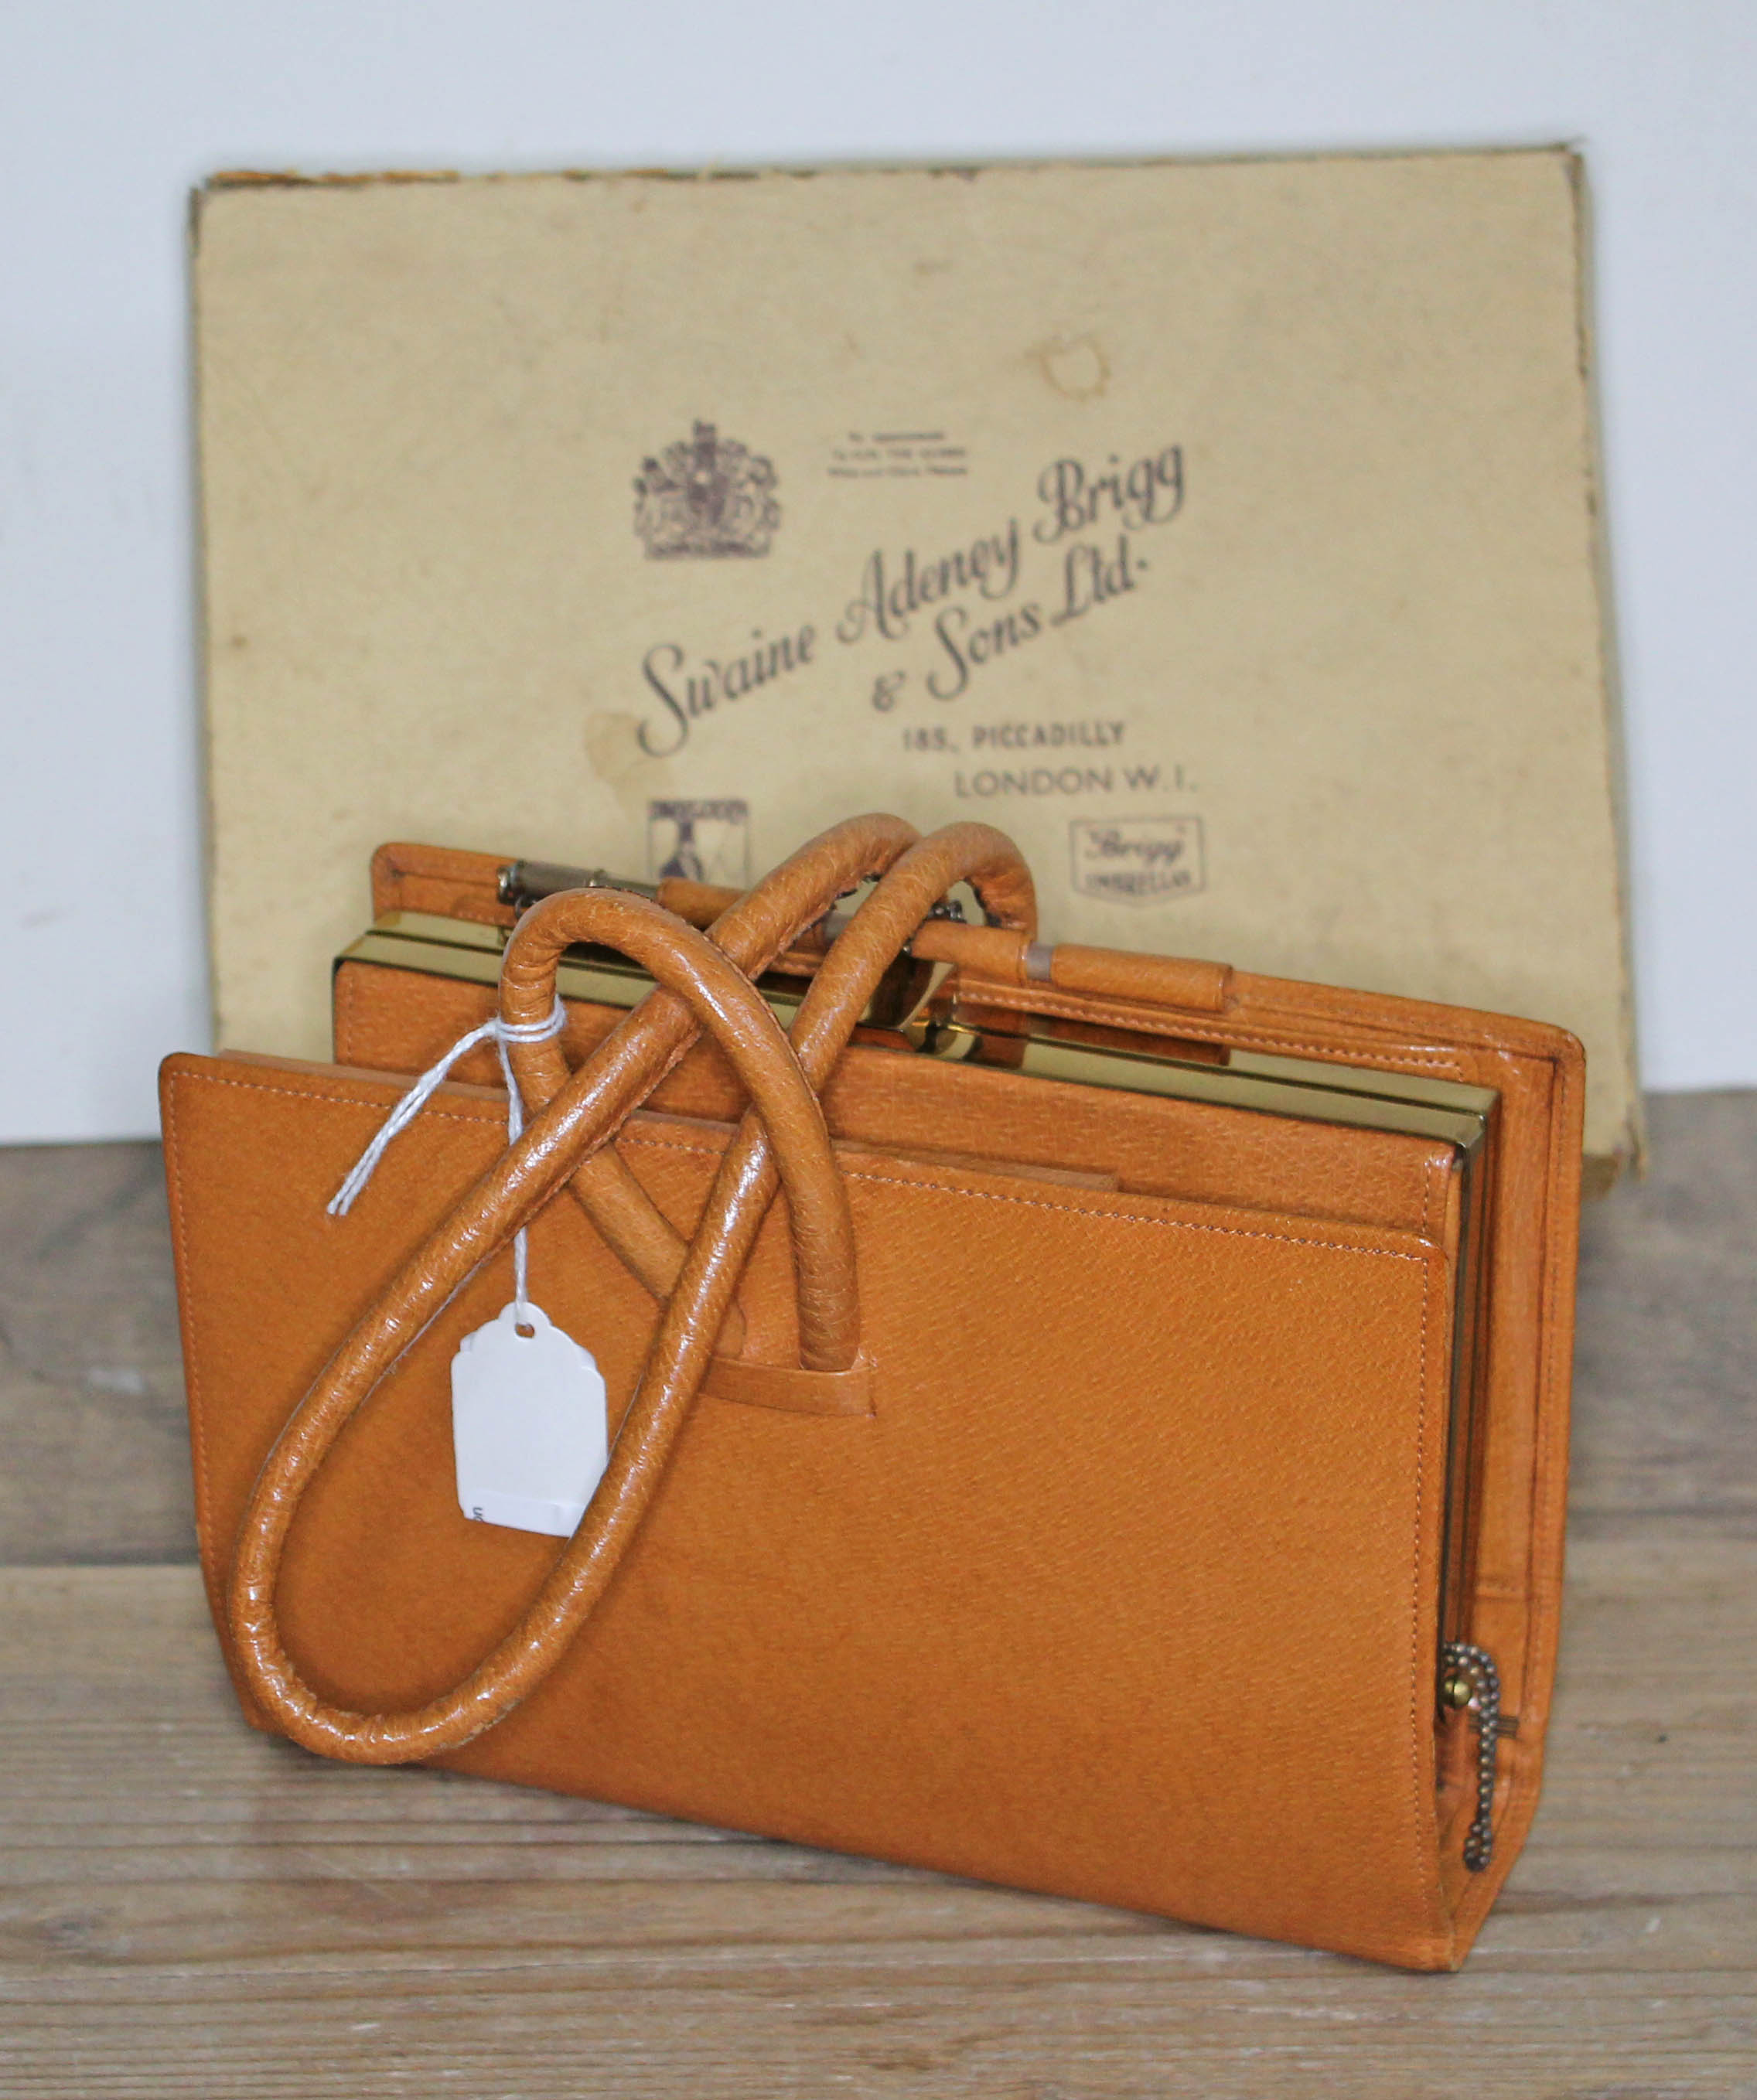 A ladies vintage leather clutch horse racing bag by Swaine, Adeney, Brigg & Sons Ltd, in original